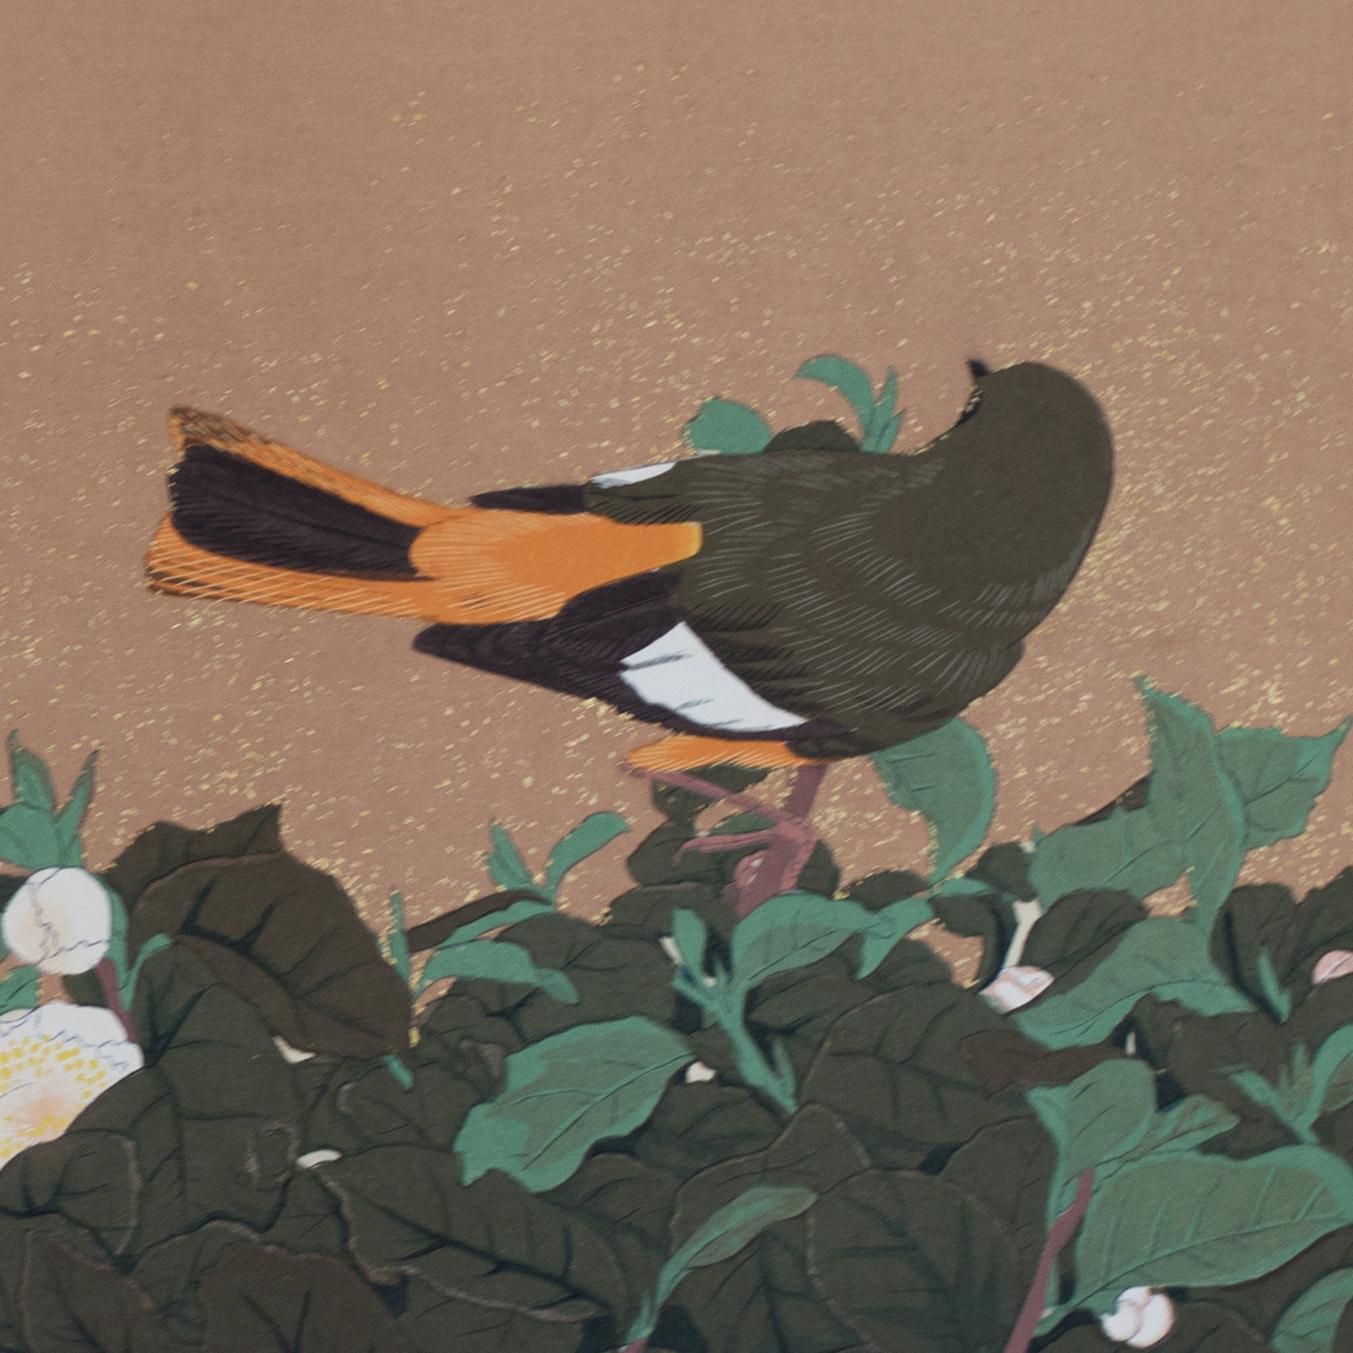 Tea Flowers and Redstart Birds - Brown Landscape Print by Tsuchiya Rakusan